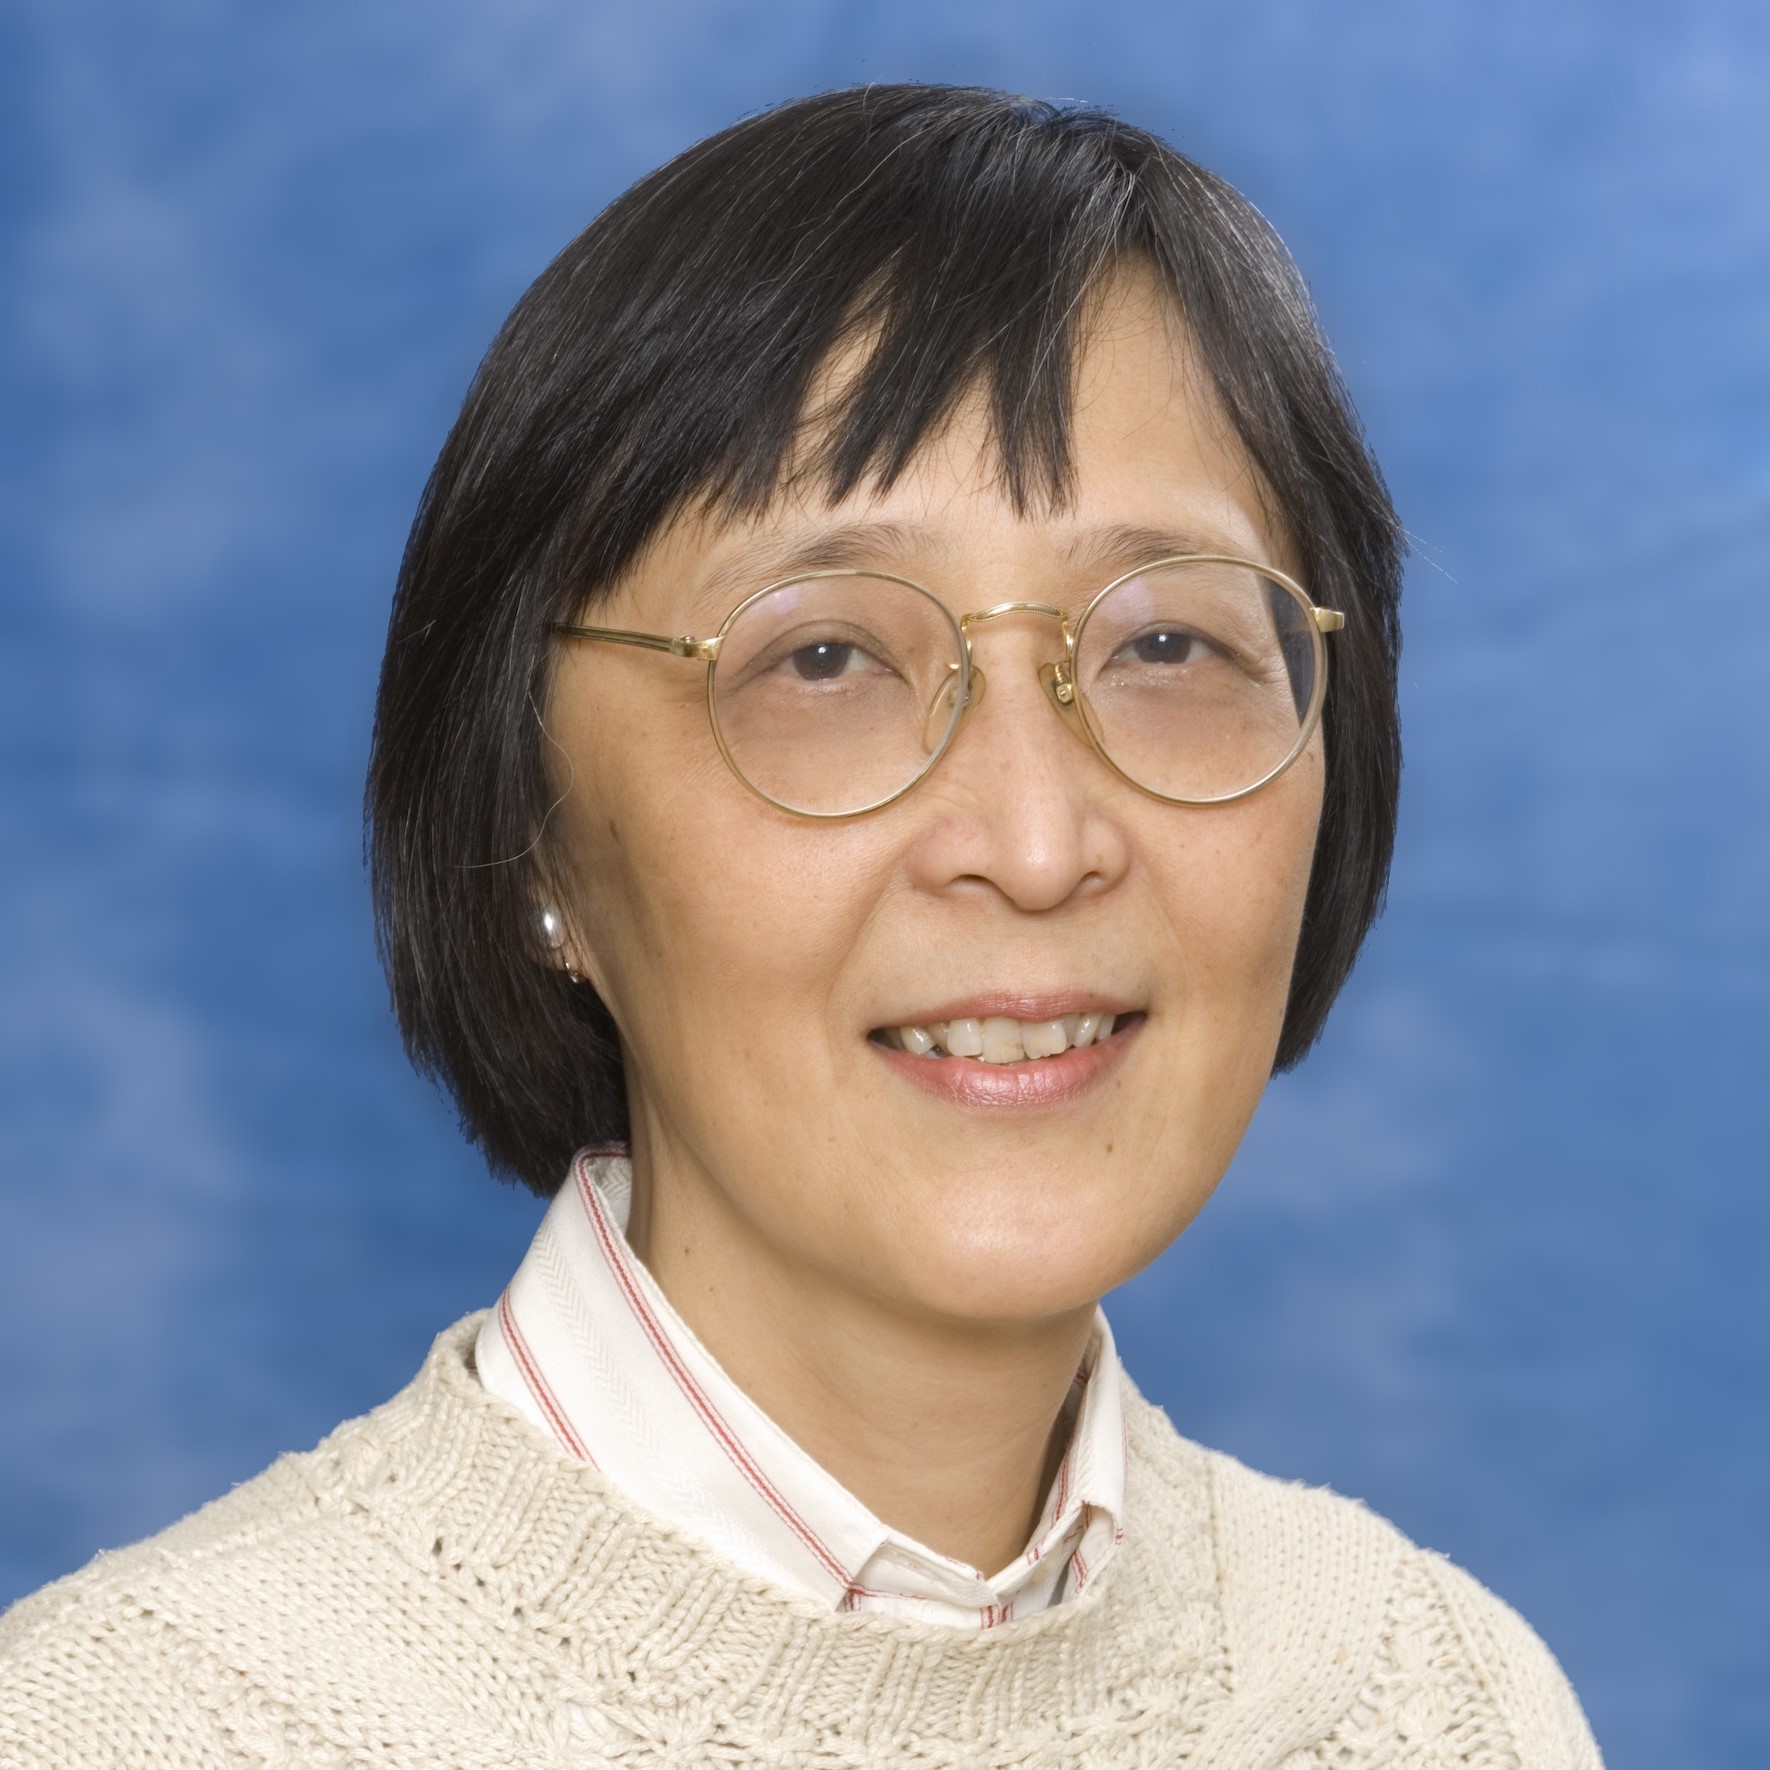 Professor Jean Woo